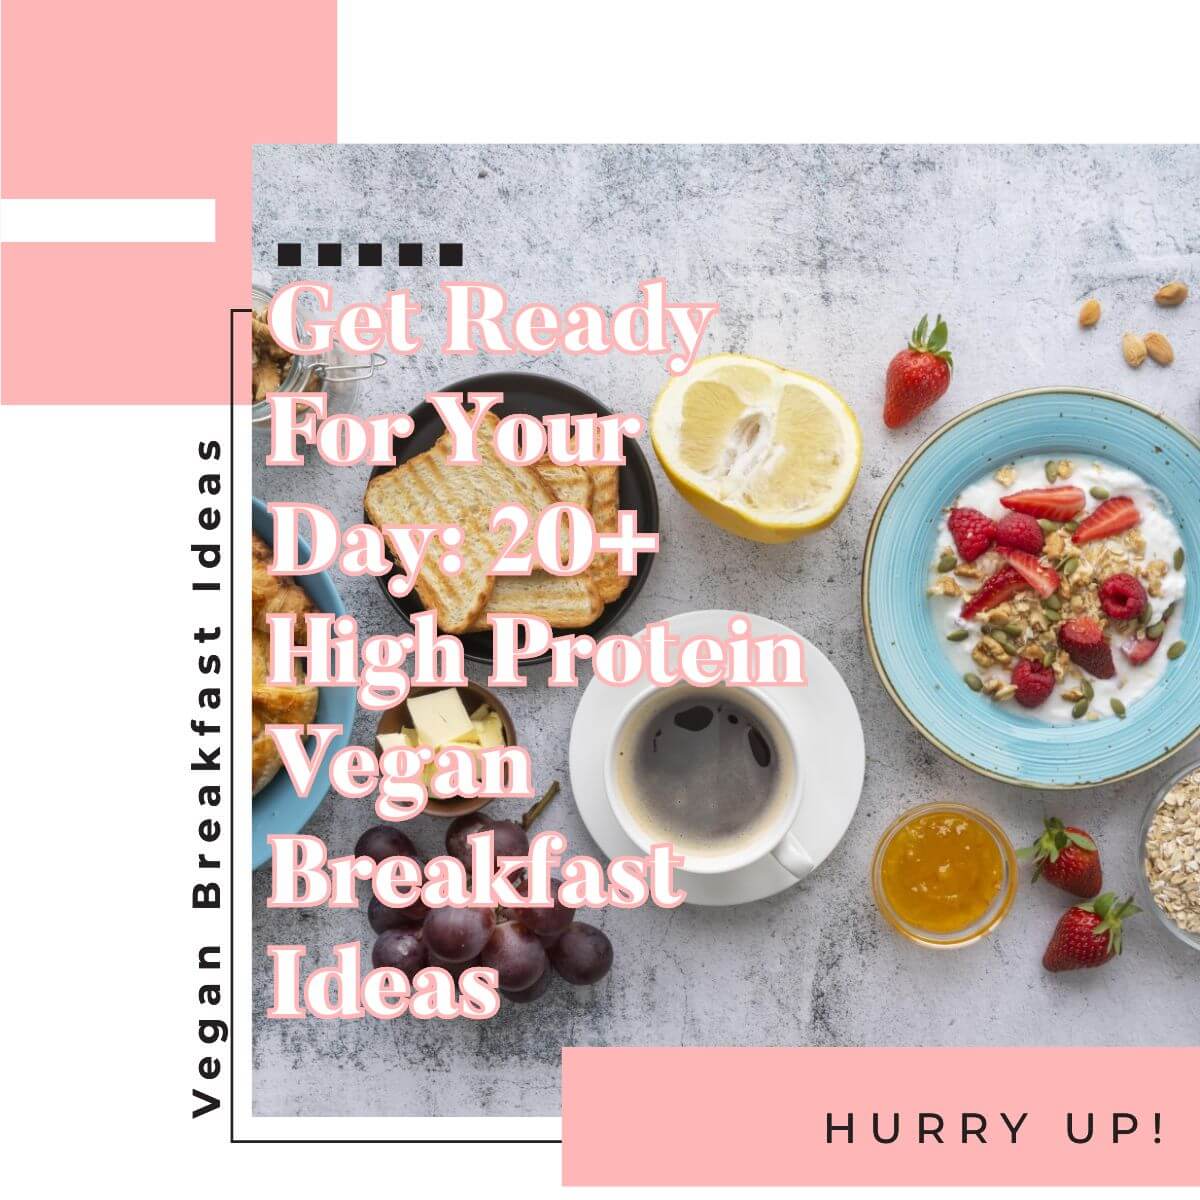 20+ High Protein Vegan Breakfast Ideas